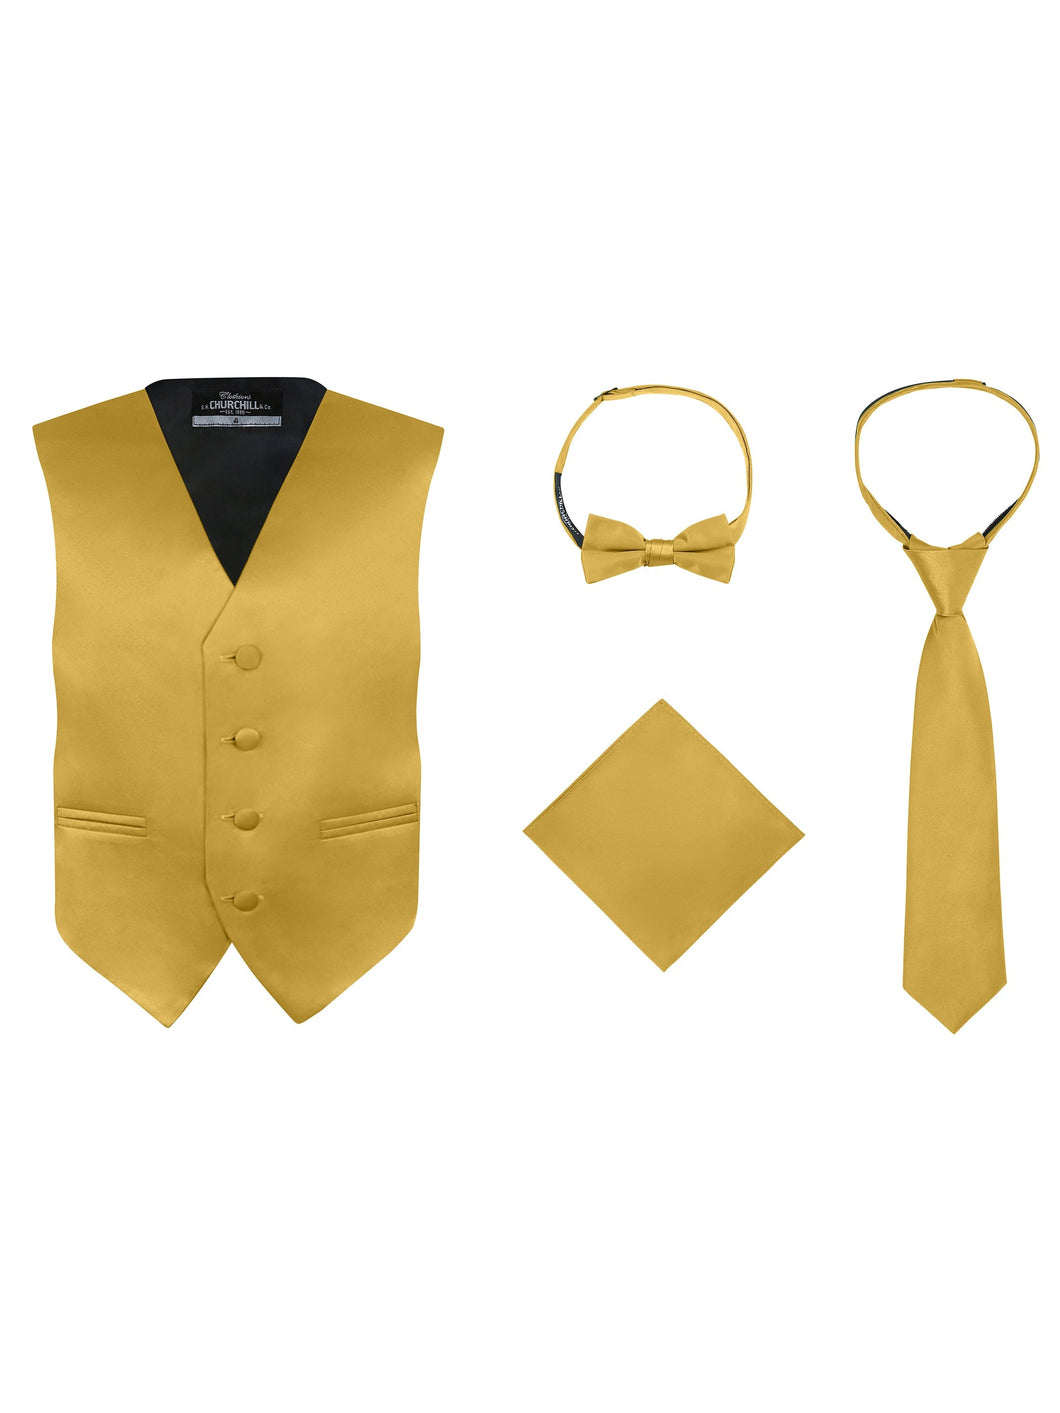 Boy's 4 Piece Vest Set, with Bow Tie, Neck Tie & Pocket Hankie